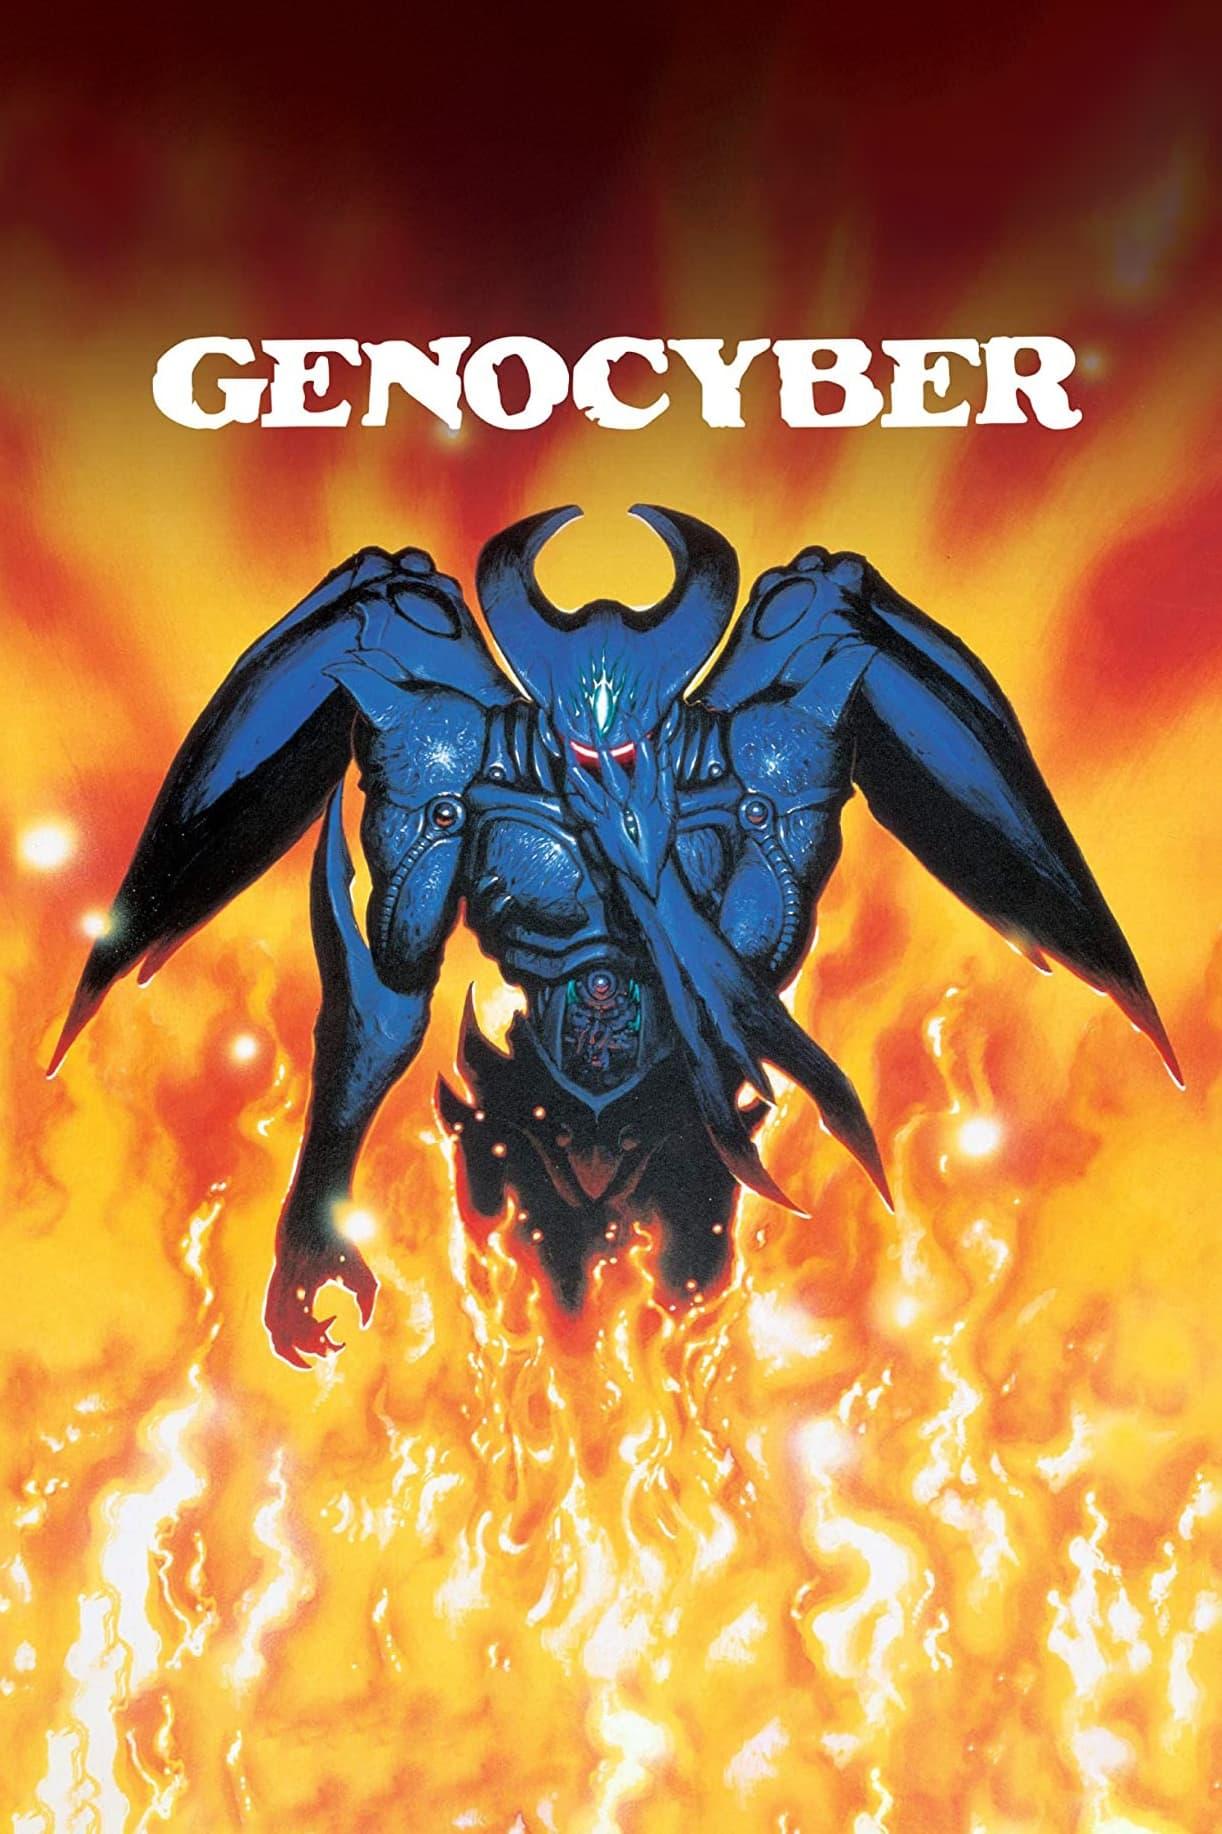 Genocyber poster